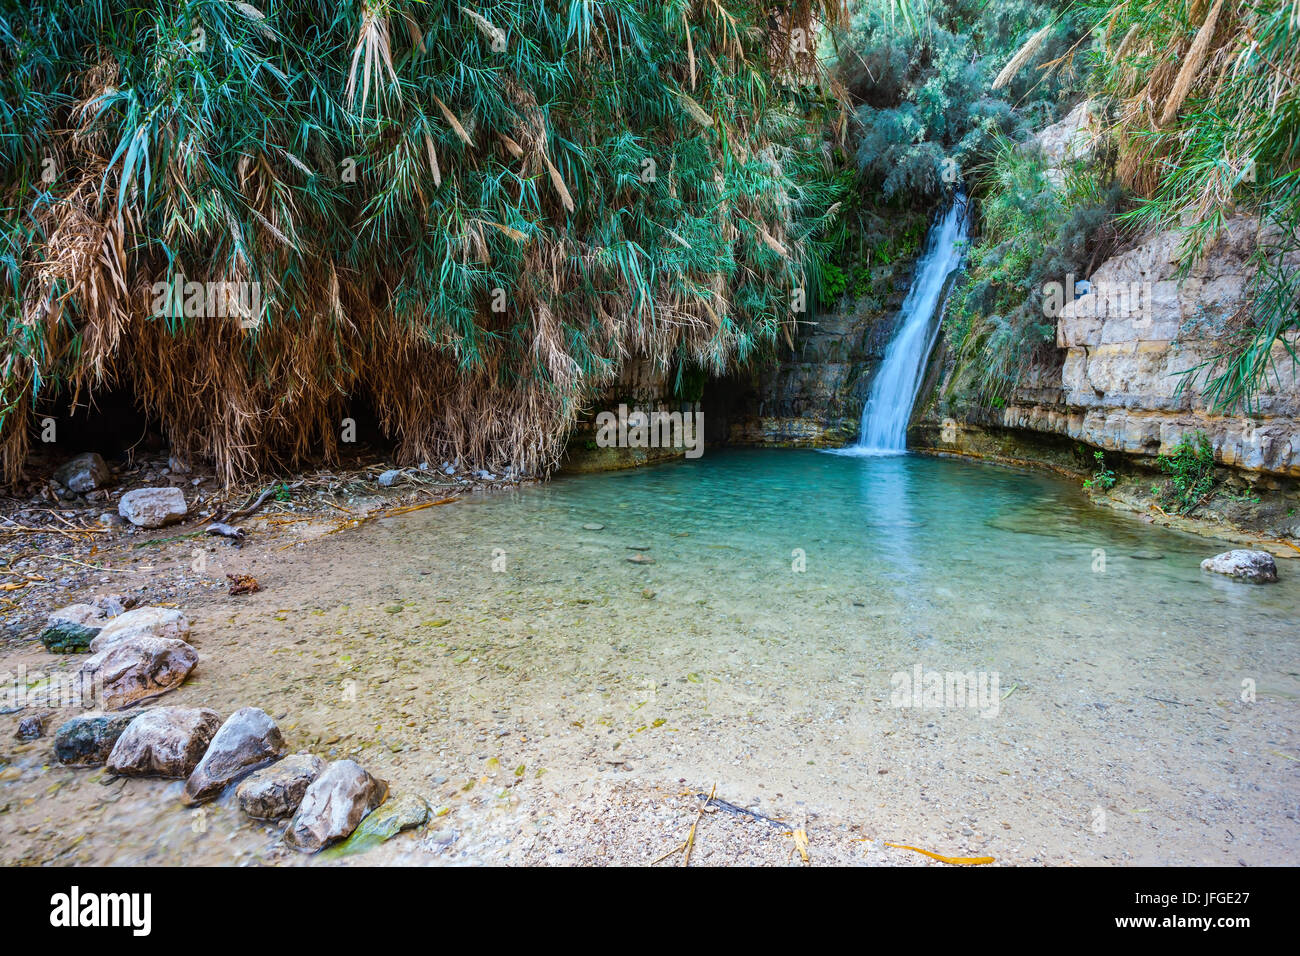 The national park Ein Gedi, Israel Stock Photo